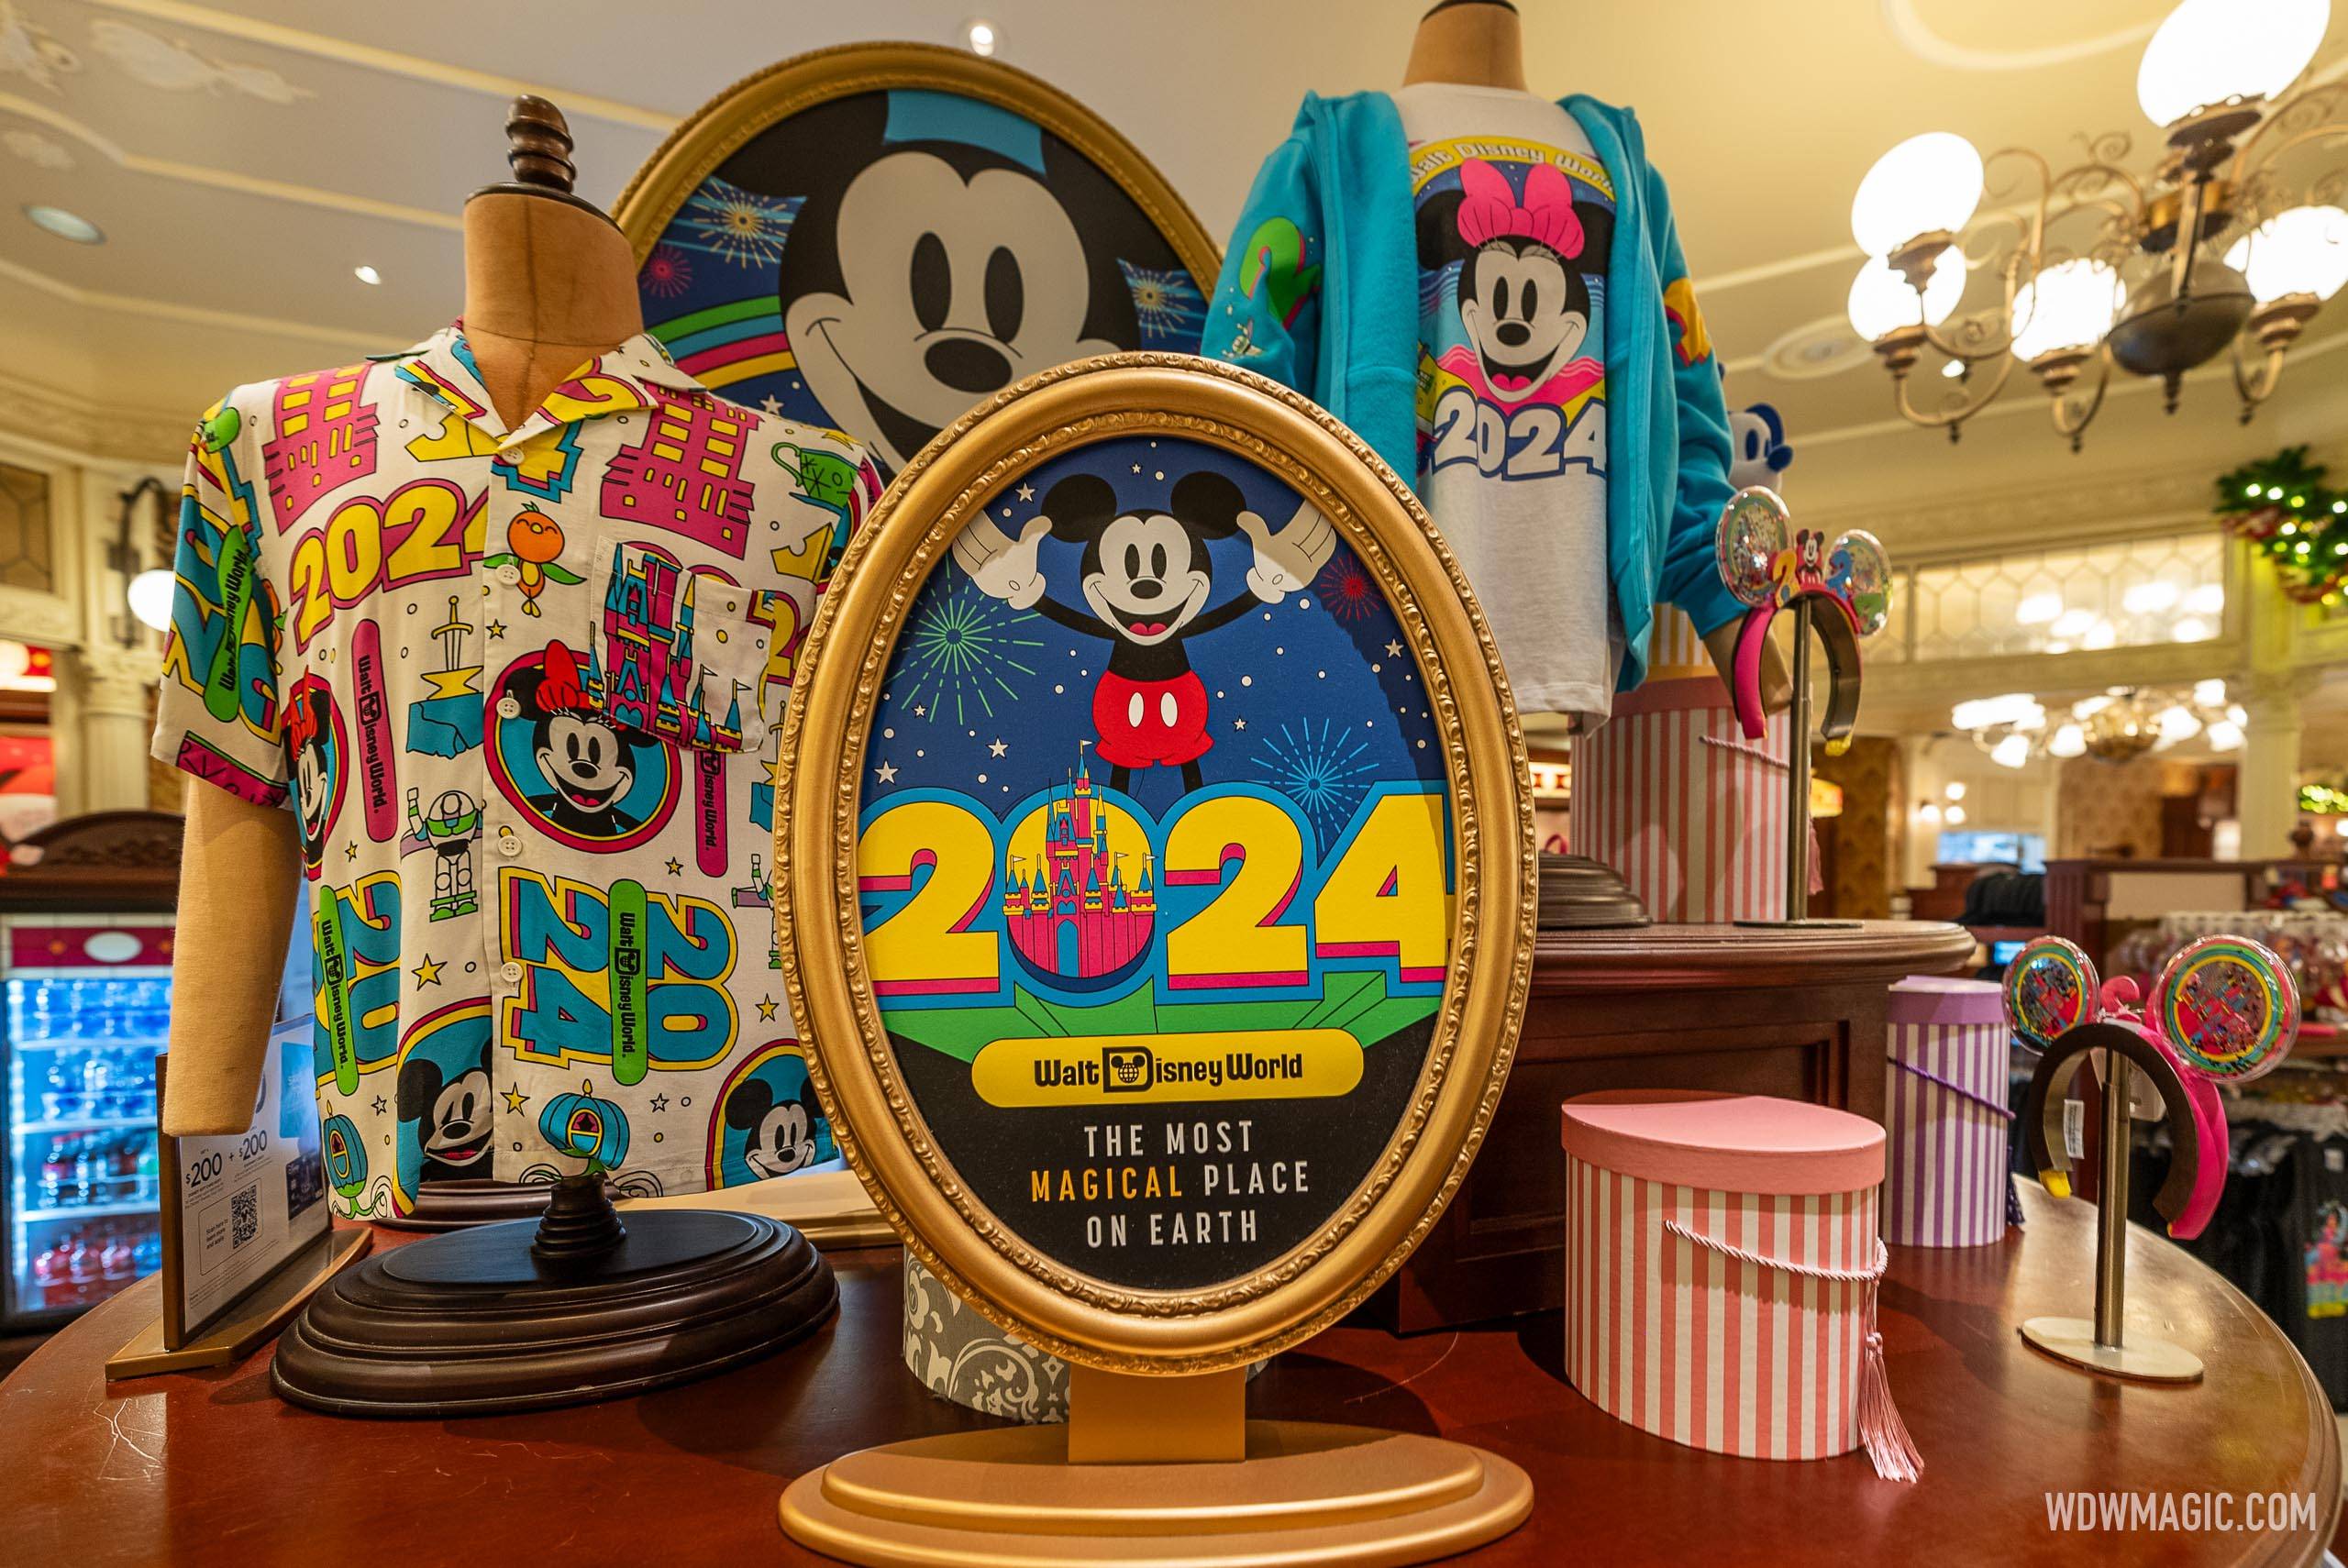 Walt Disney World 2024 logo merchandise